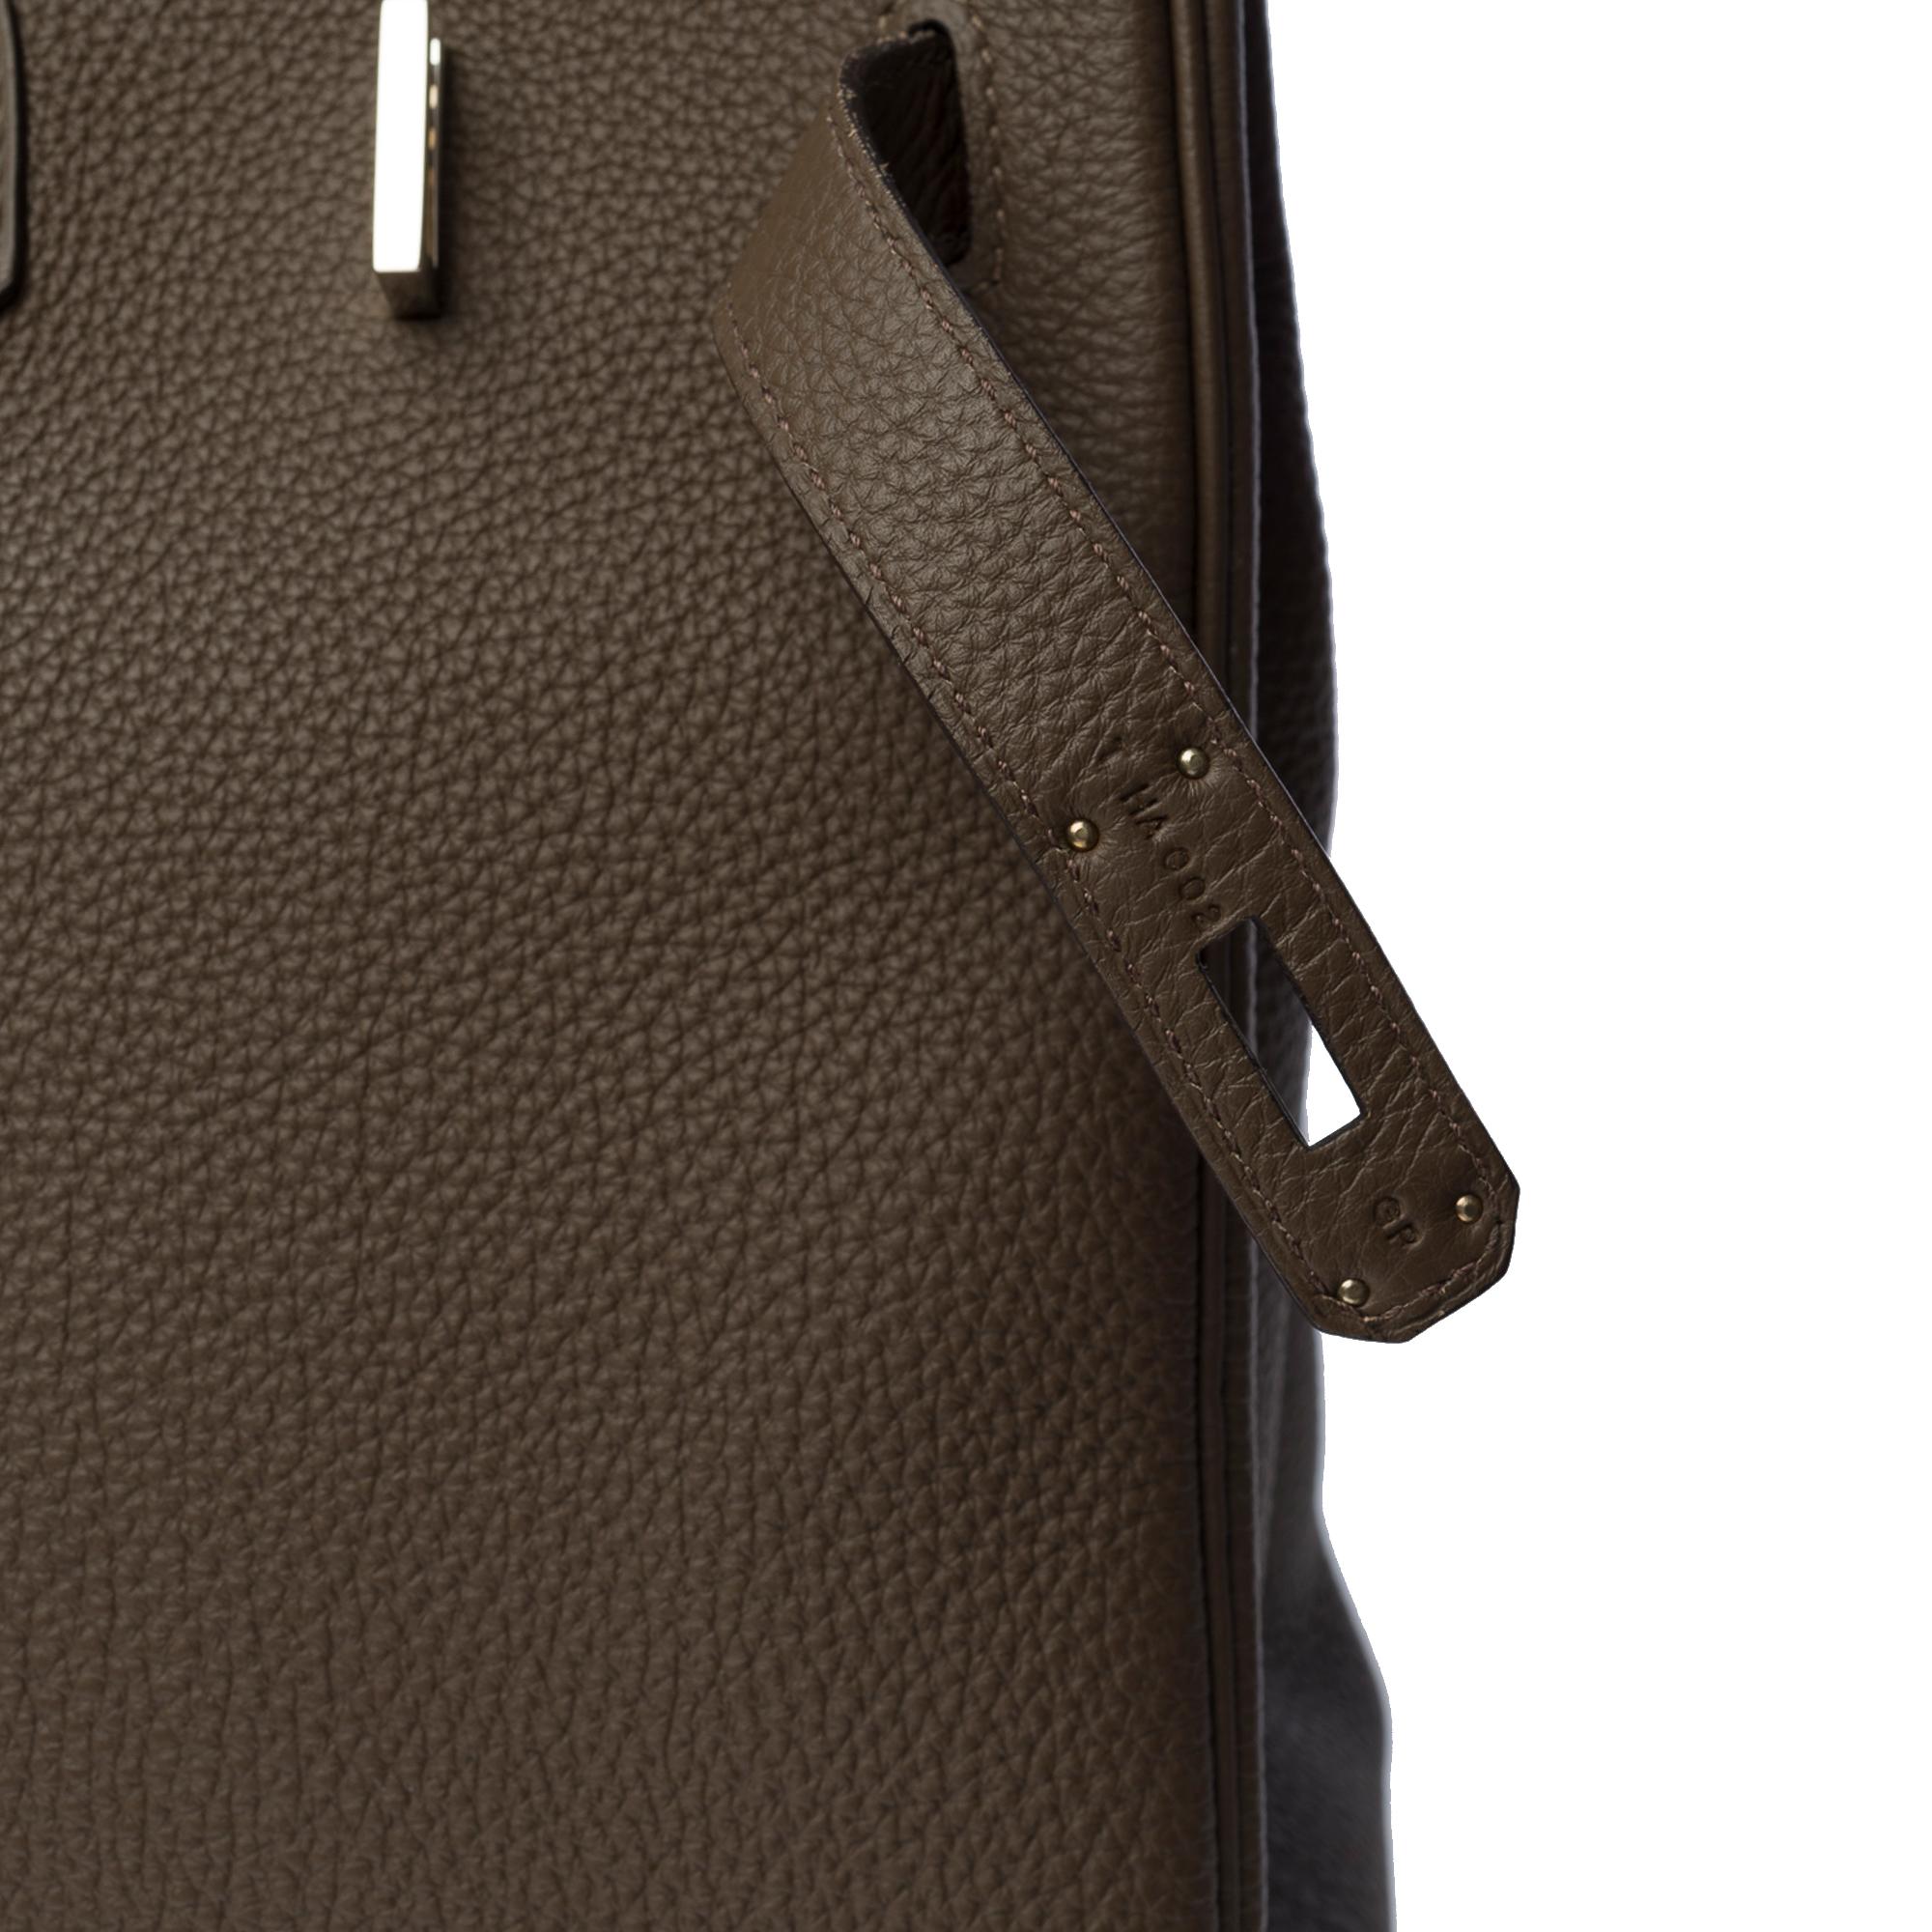 Magnificent Hermès Birkin 35 handbag in Gris Elephant Togo leather, SHW 3